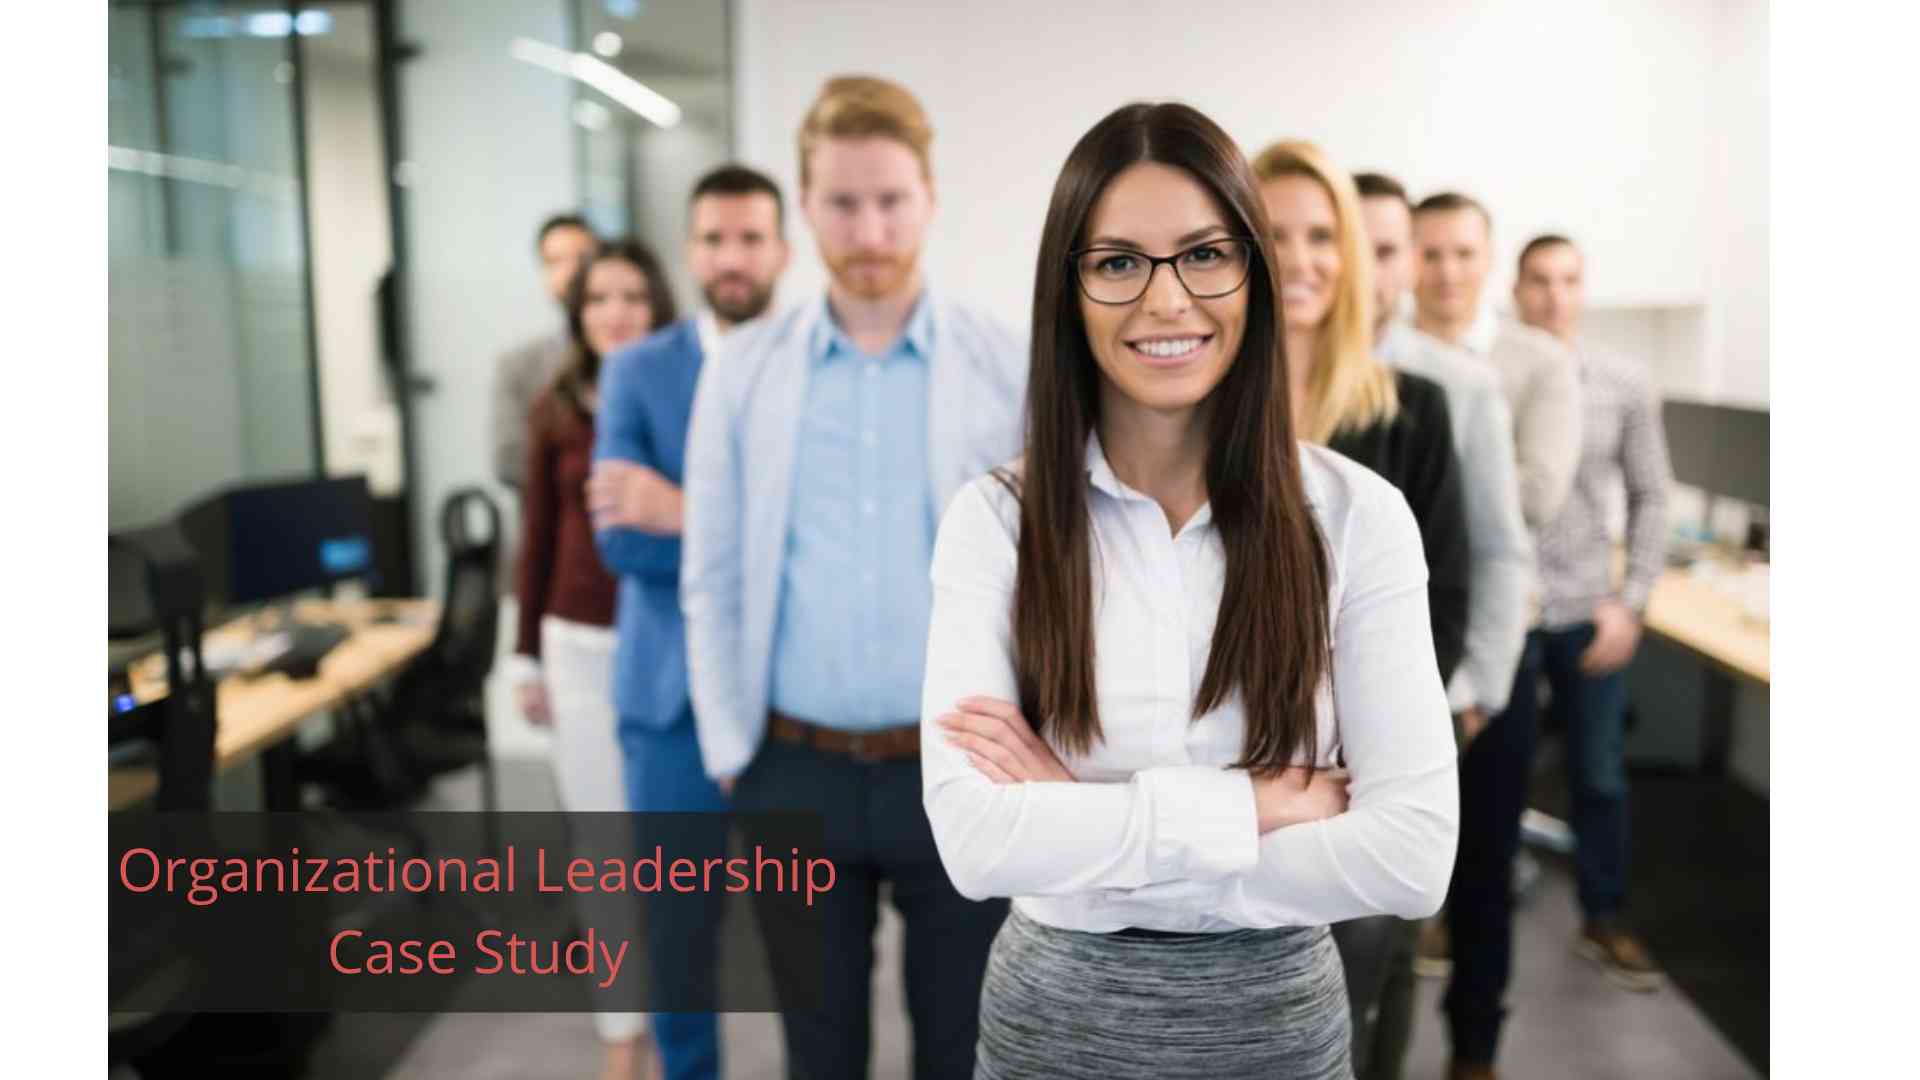 Organizational leadership case study